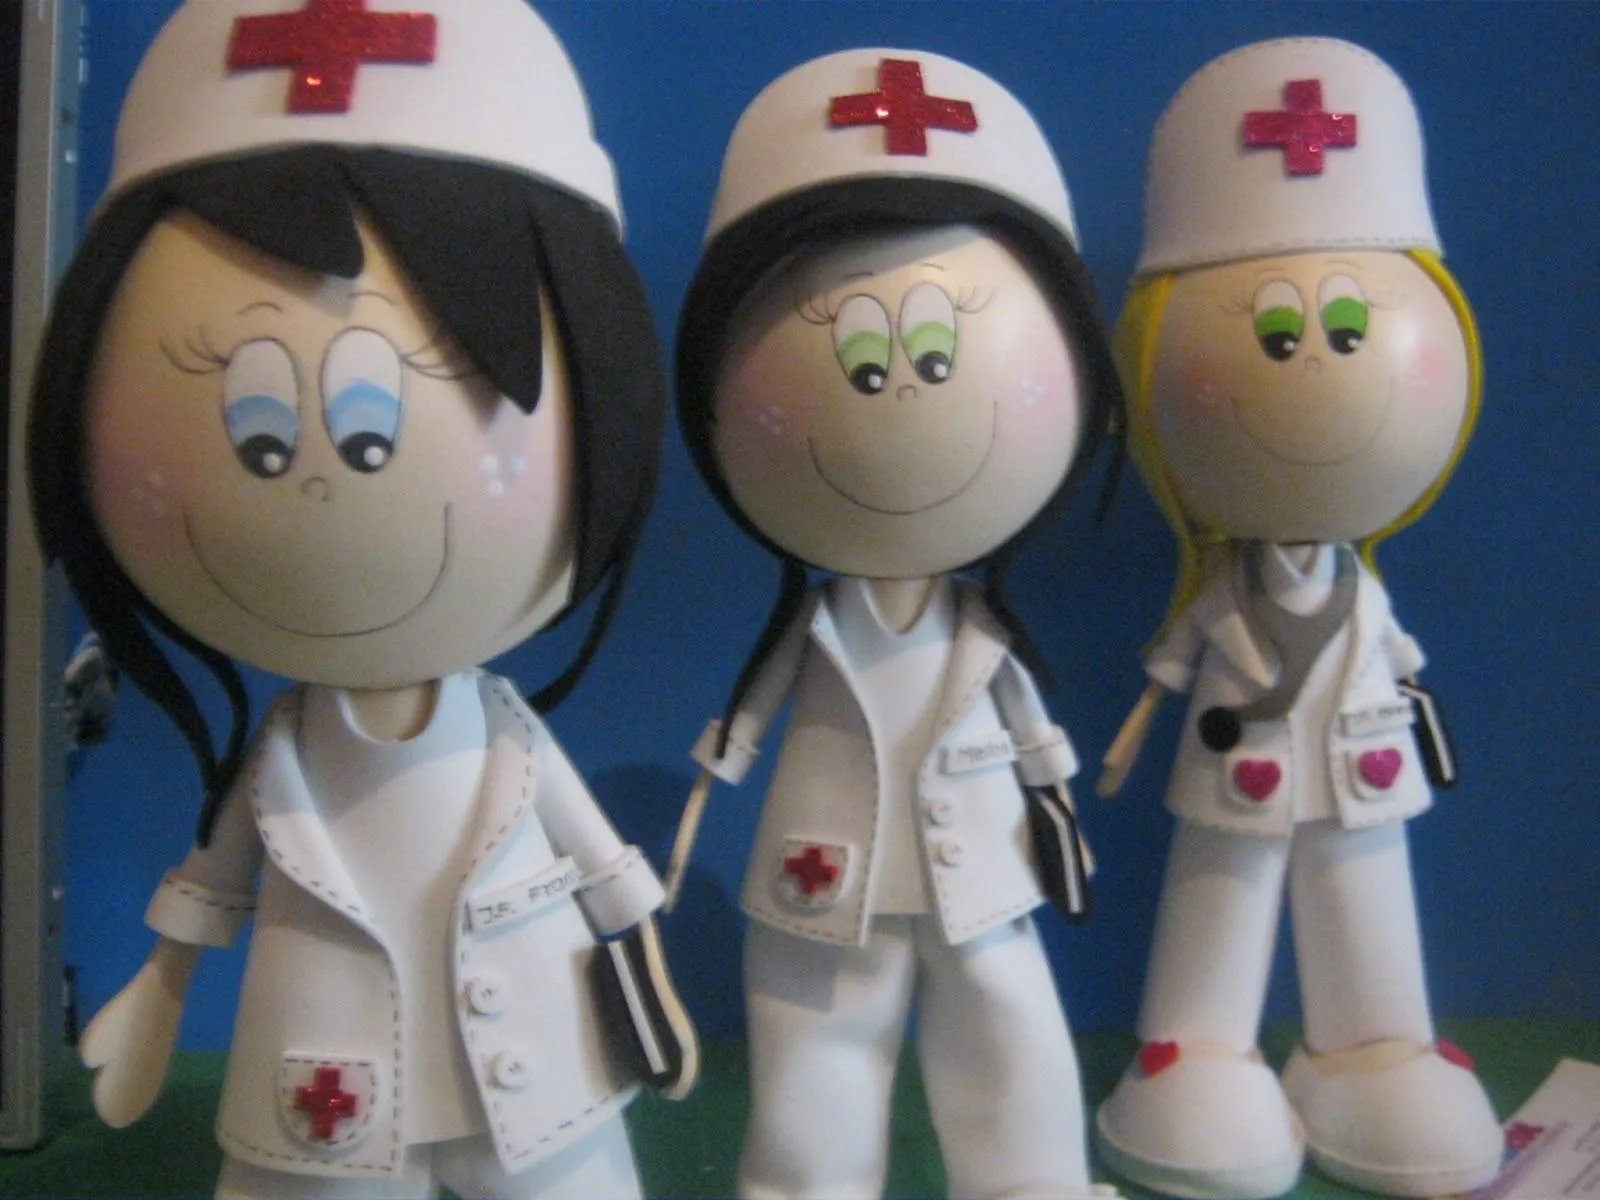 Enfermeras en fomi - Imagui